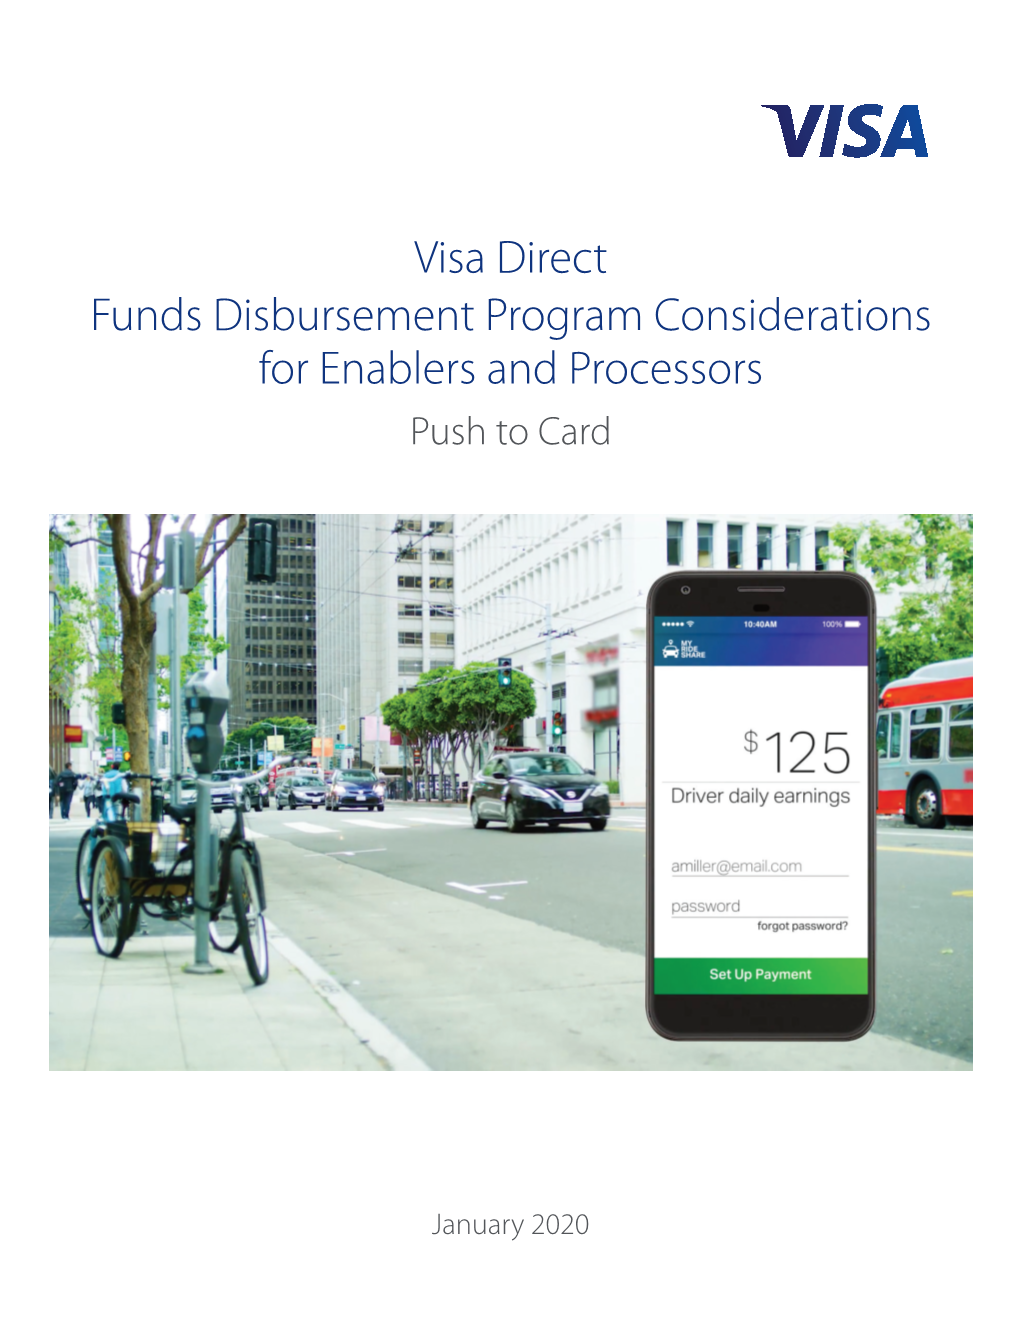 Visa Direct Funds Disbursement Program Considerations: Push To